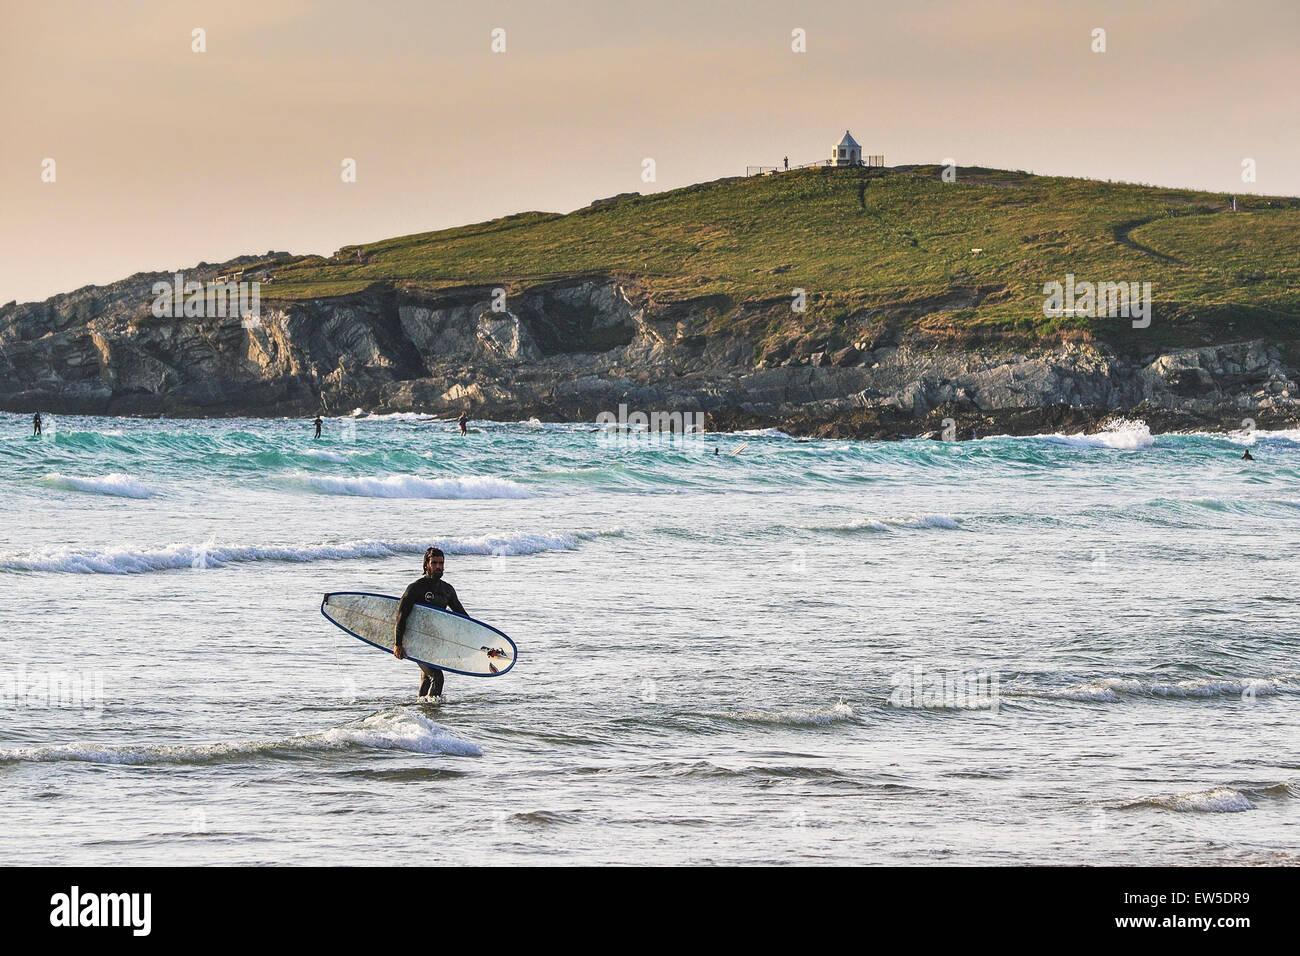 Un surfeur sortant de la mer à la plage de Fistral, Newquay, Cornwall. UK. Banque D'Images